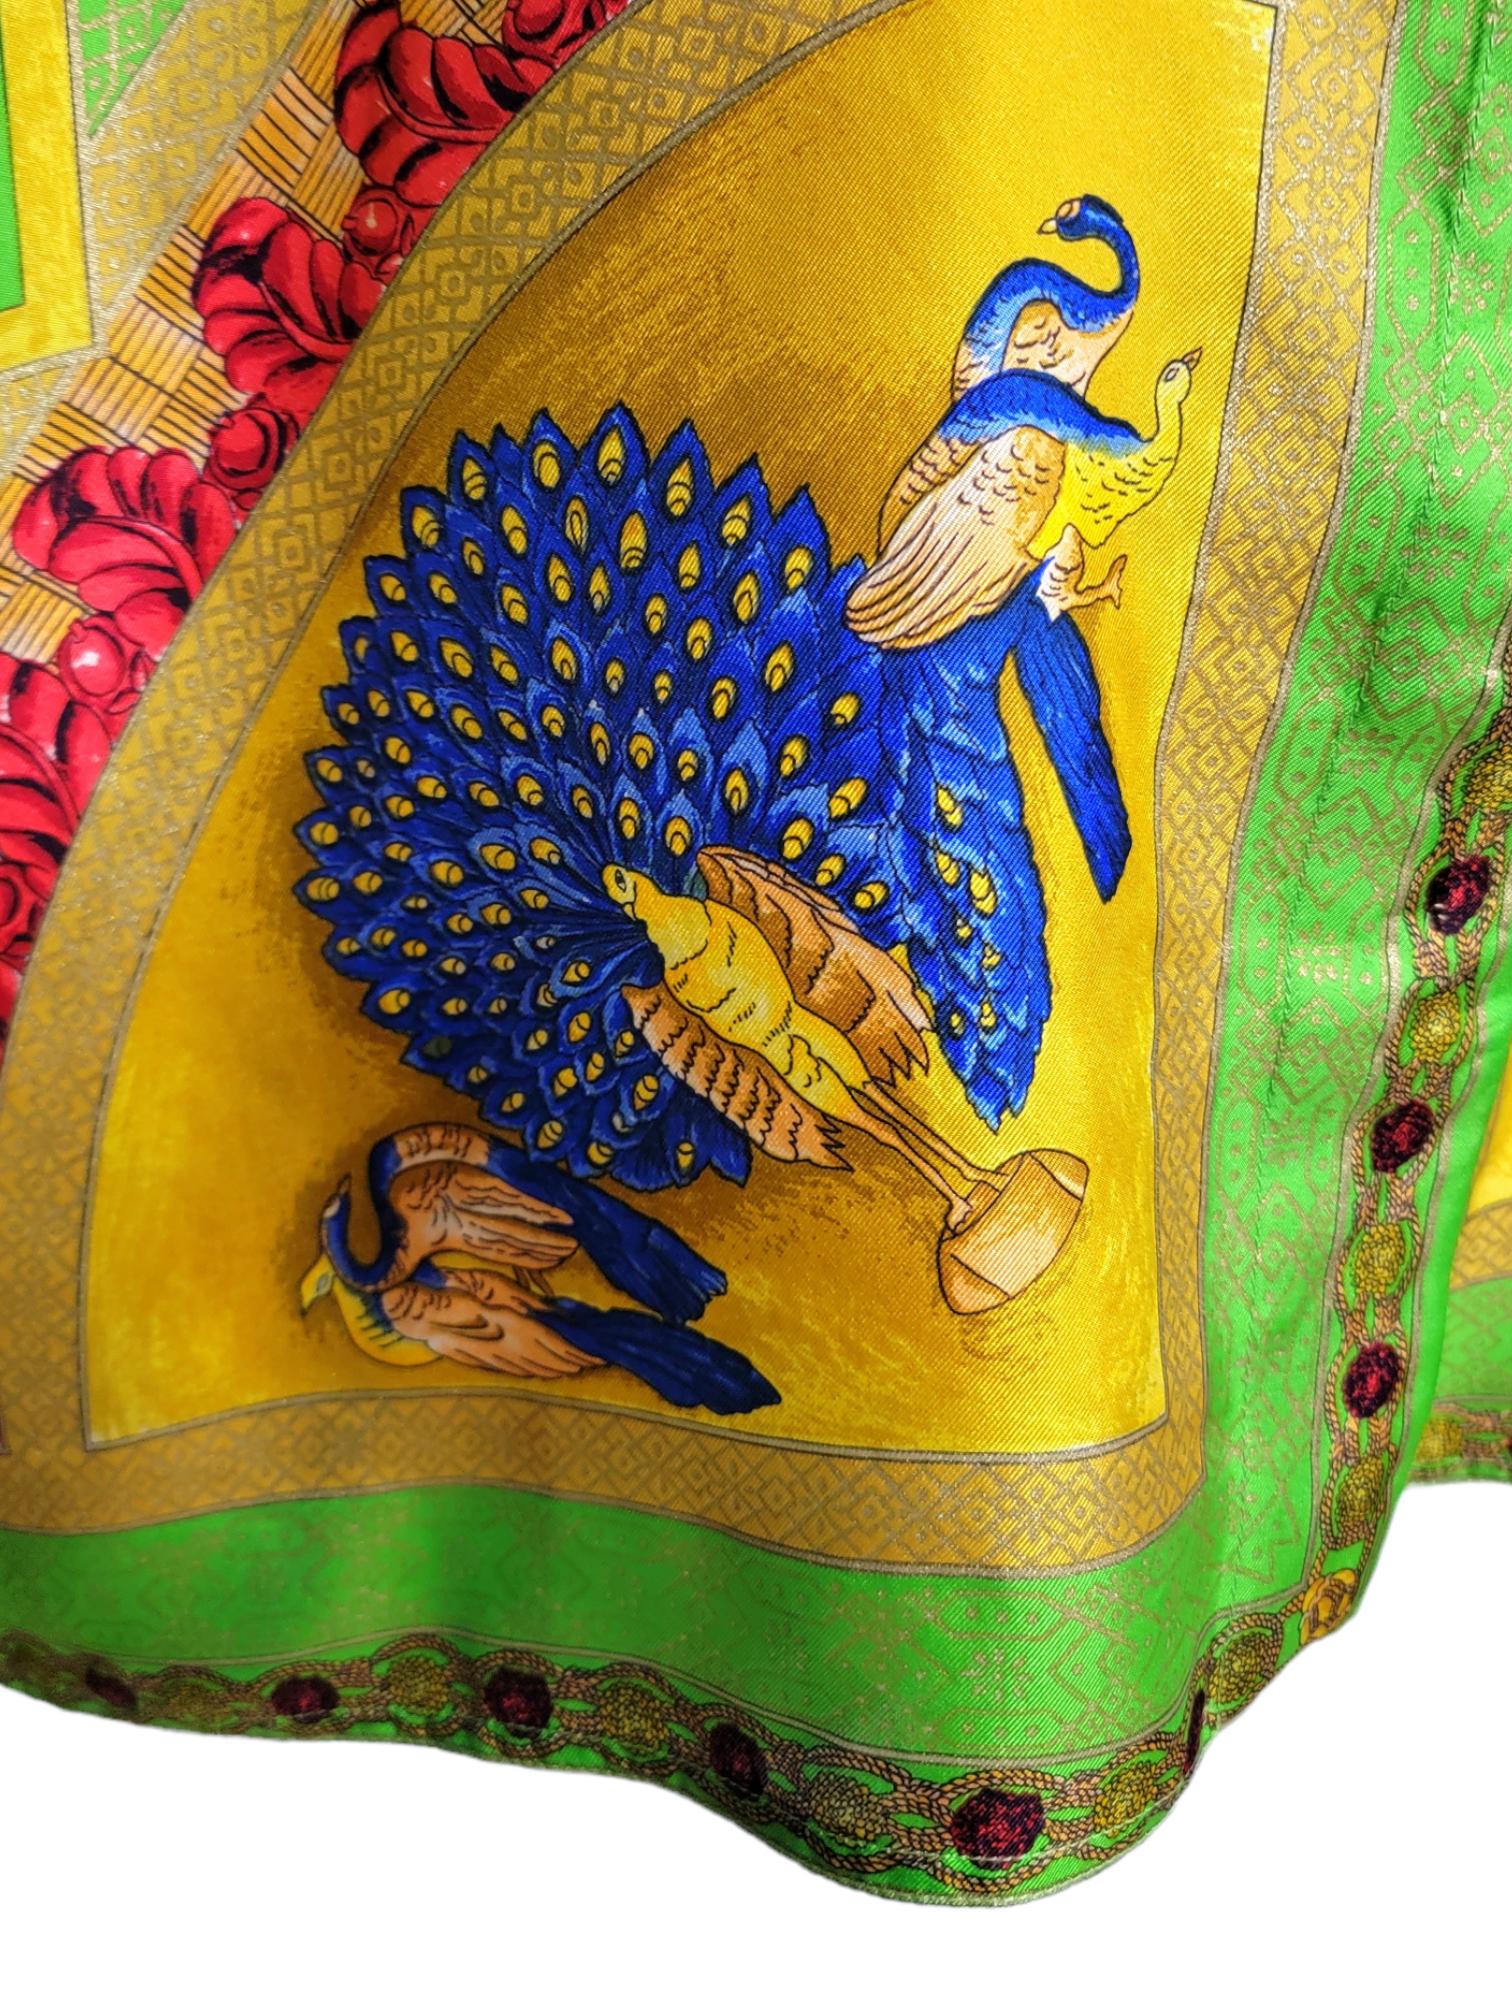 Gianni Versace Marco Polo Silk Shirt Chinese Emperor Peacocks 1992  8